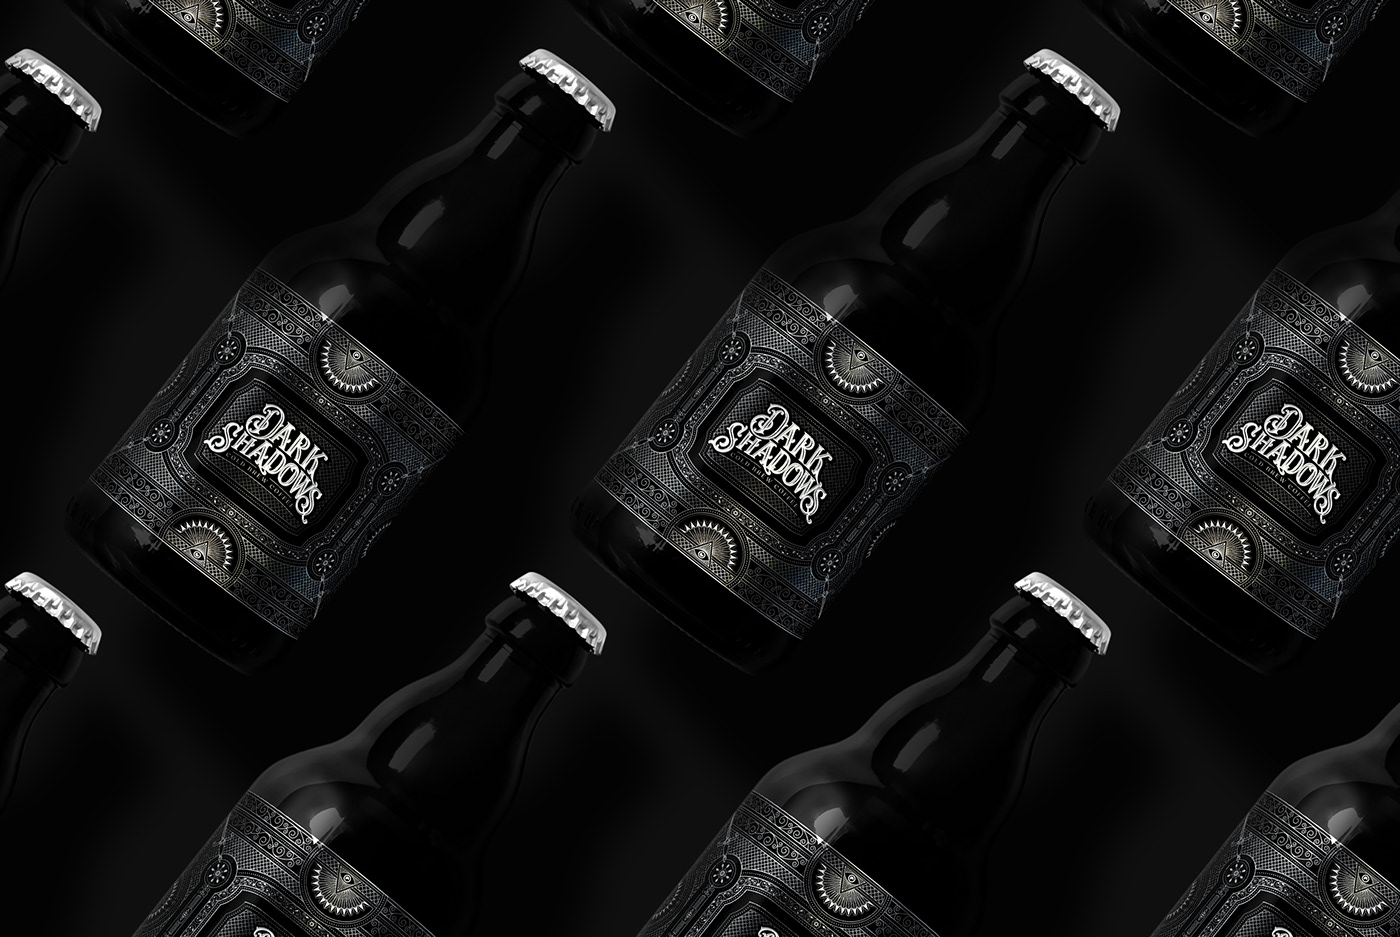 label design packaging design dark Coffee Cold Brew bottle metal glass silver shadow